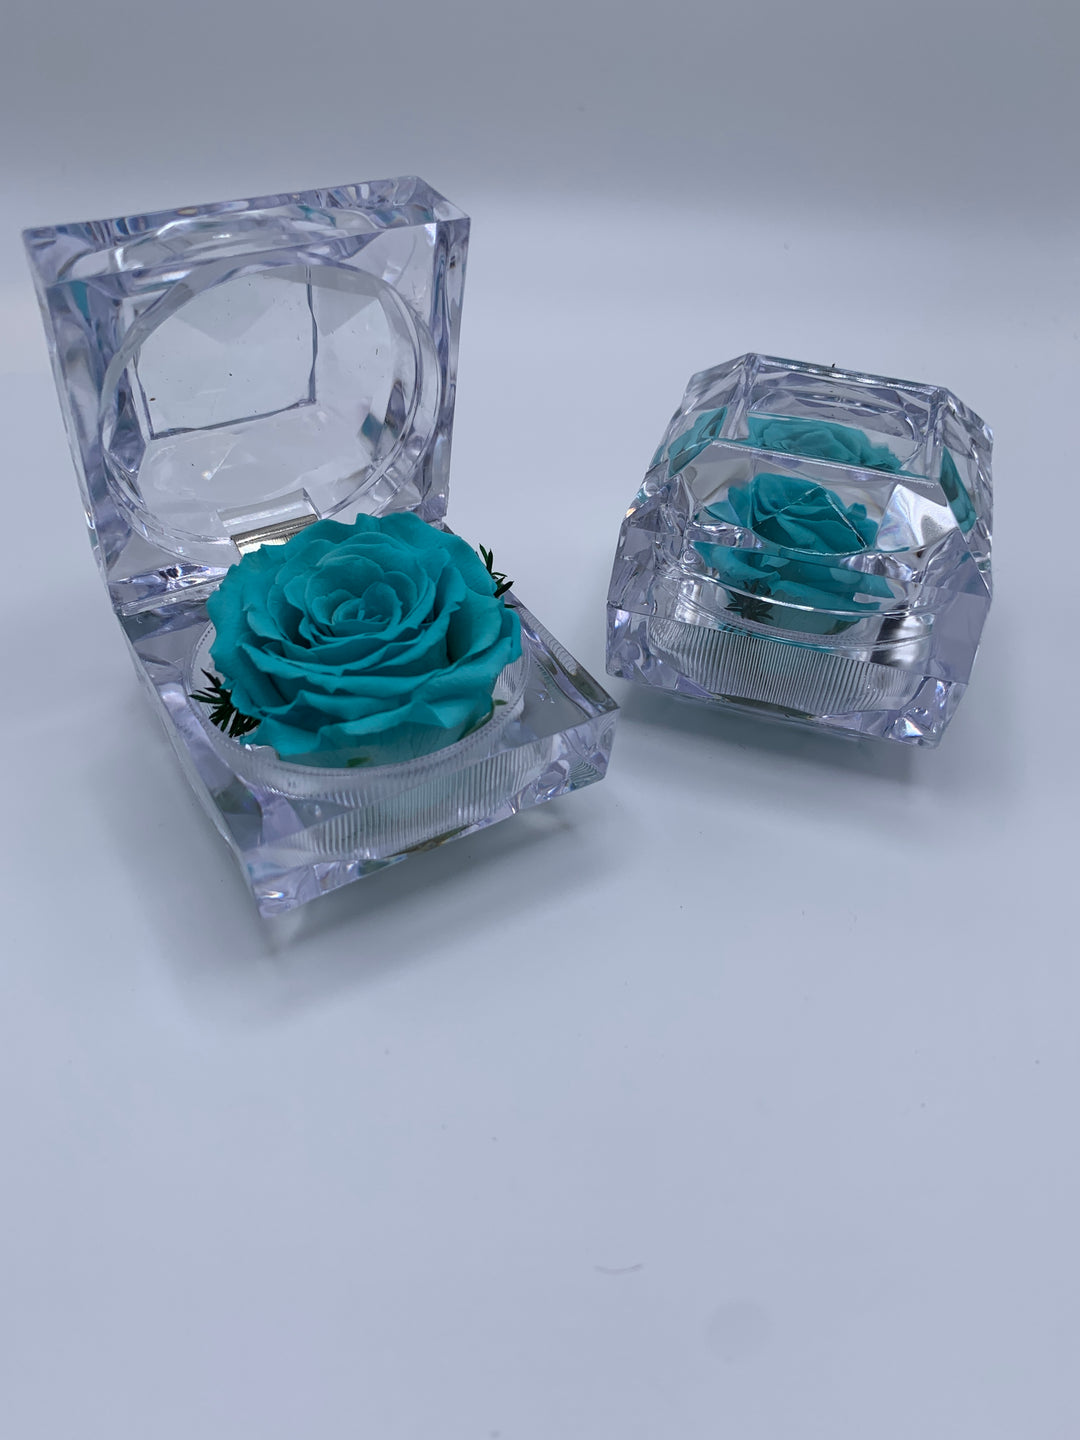 Mini jewel rose